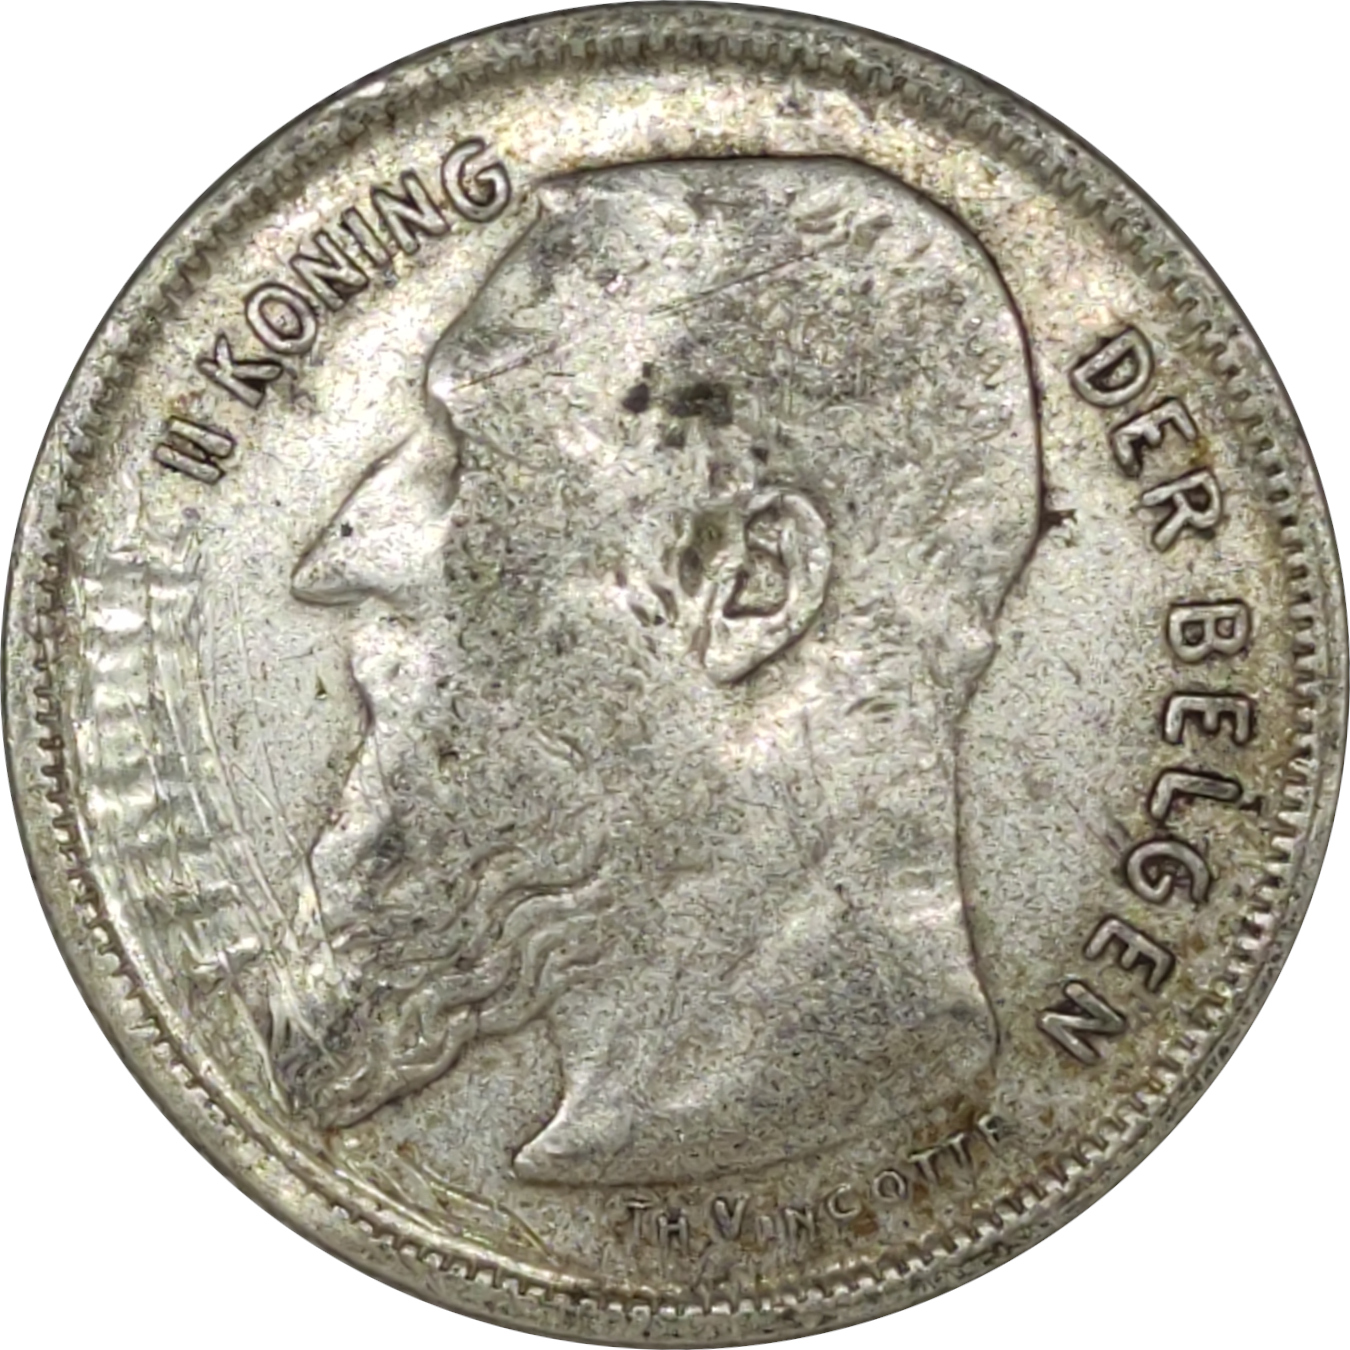 2 francs - Léopold II - Tête agée